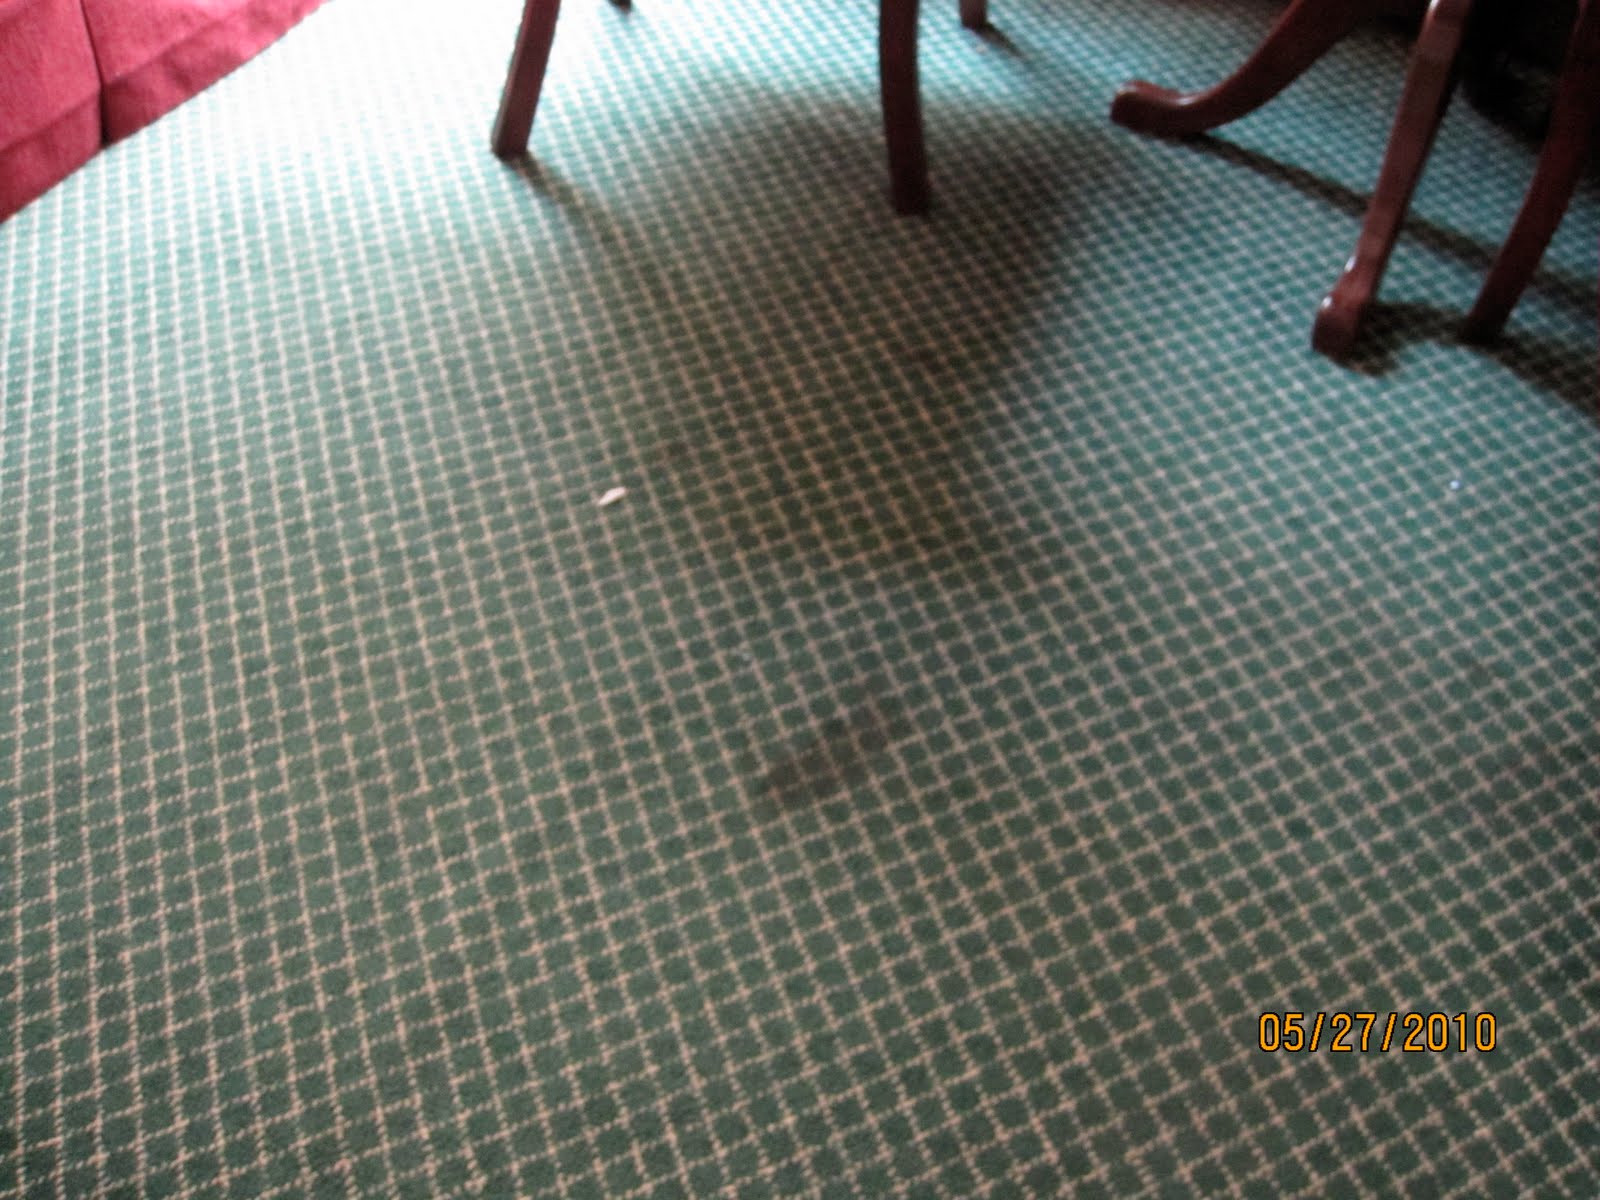 Sperm on carpet